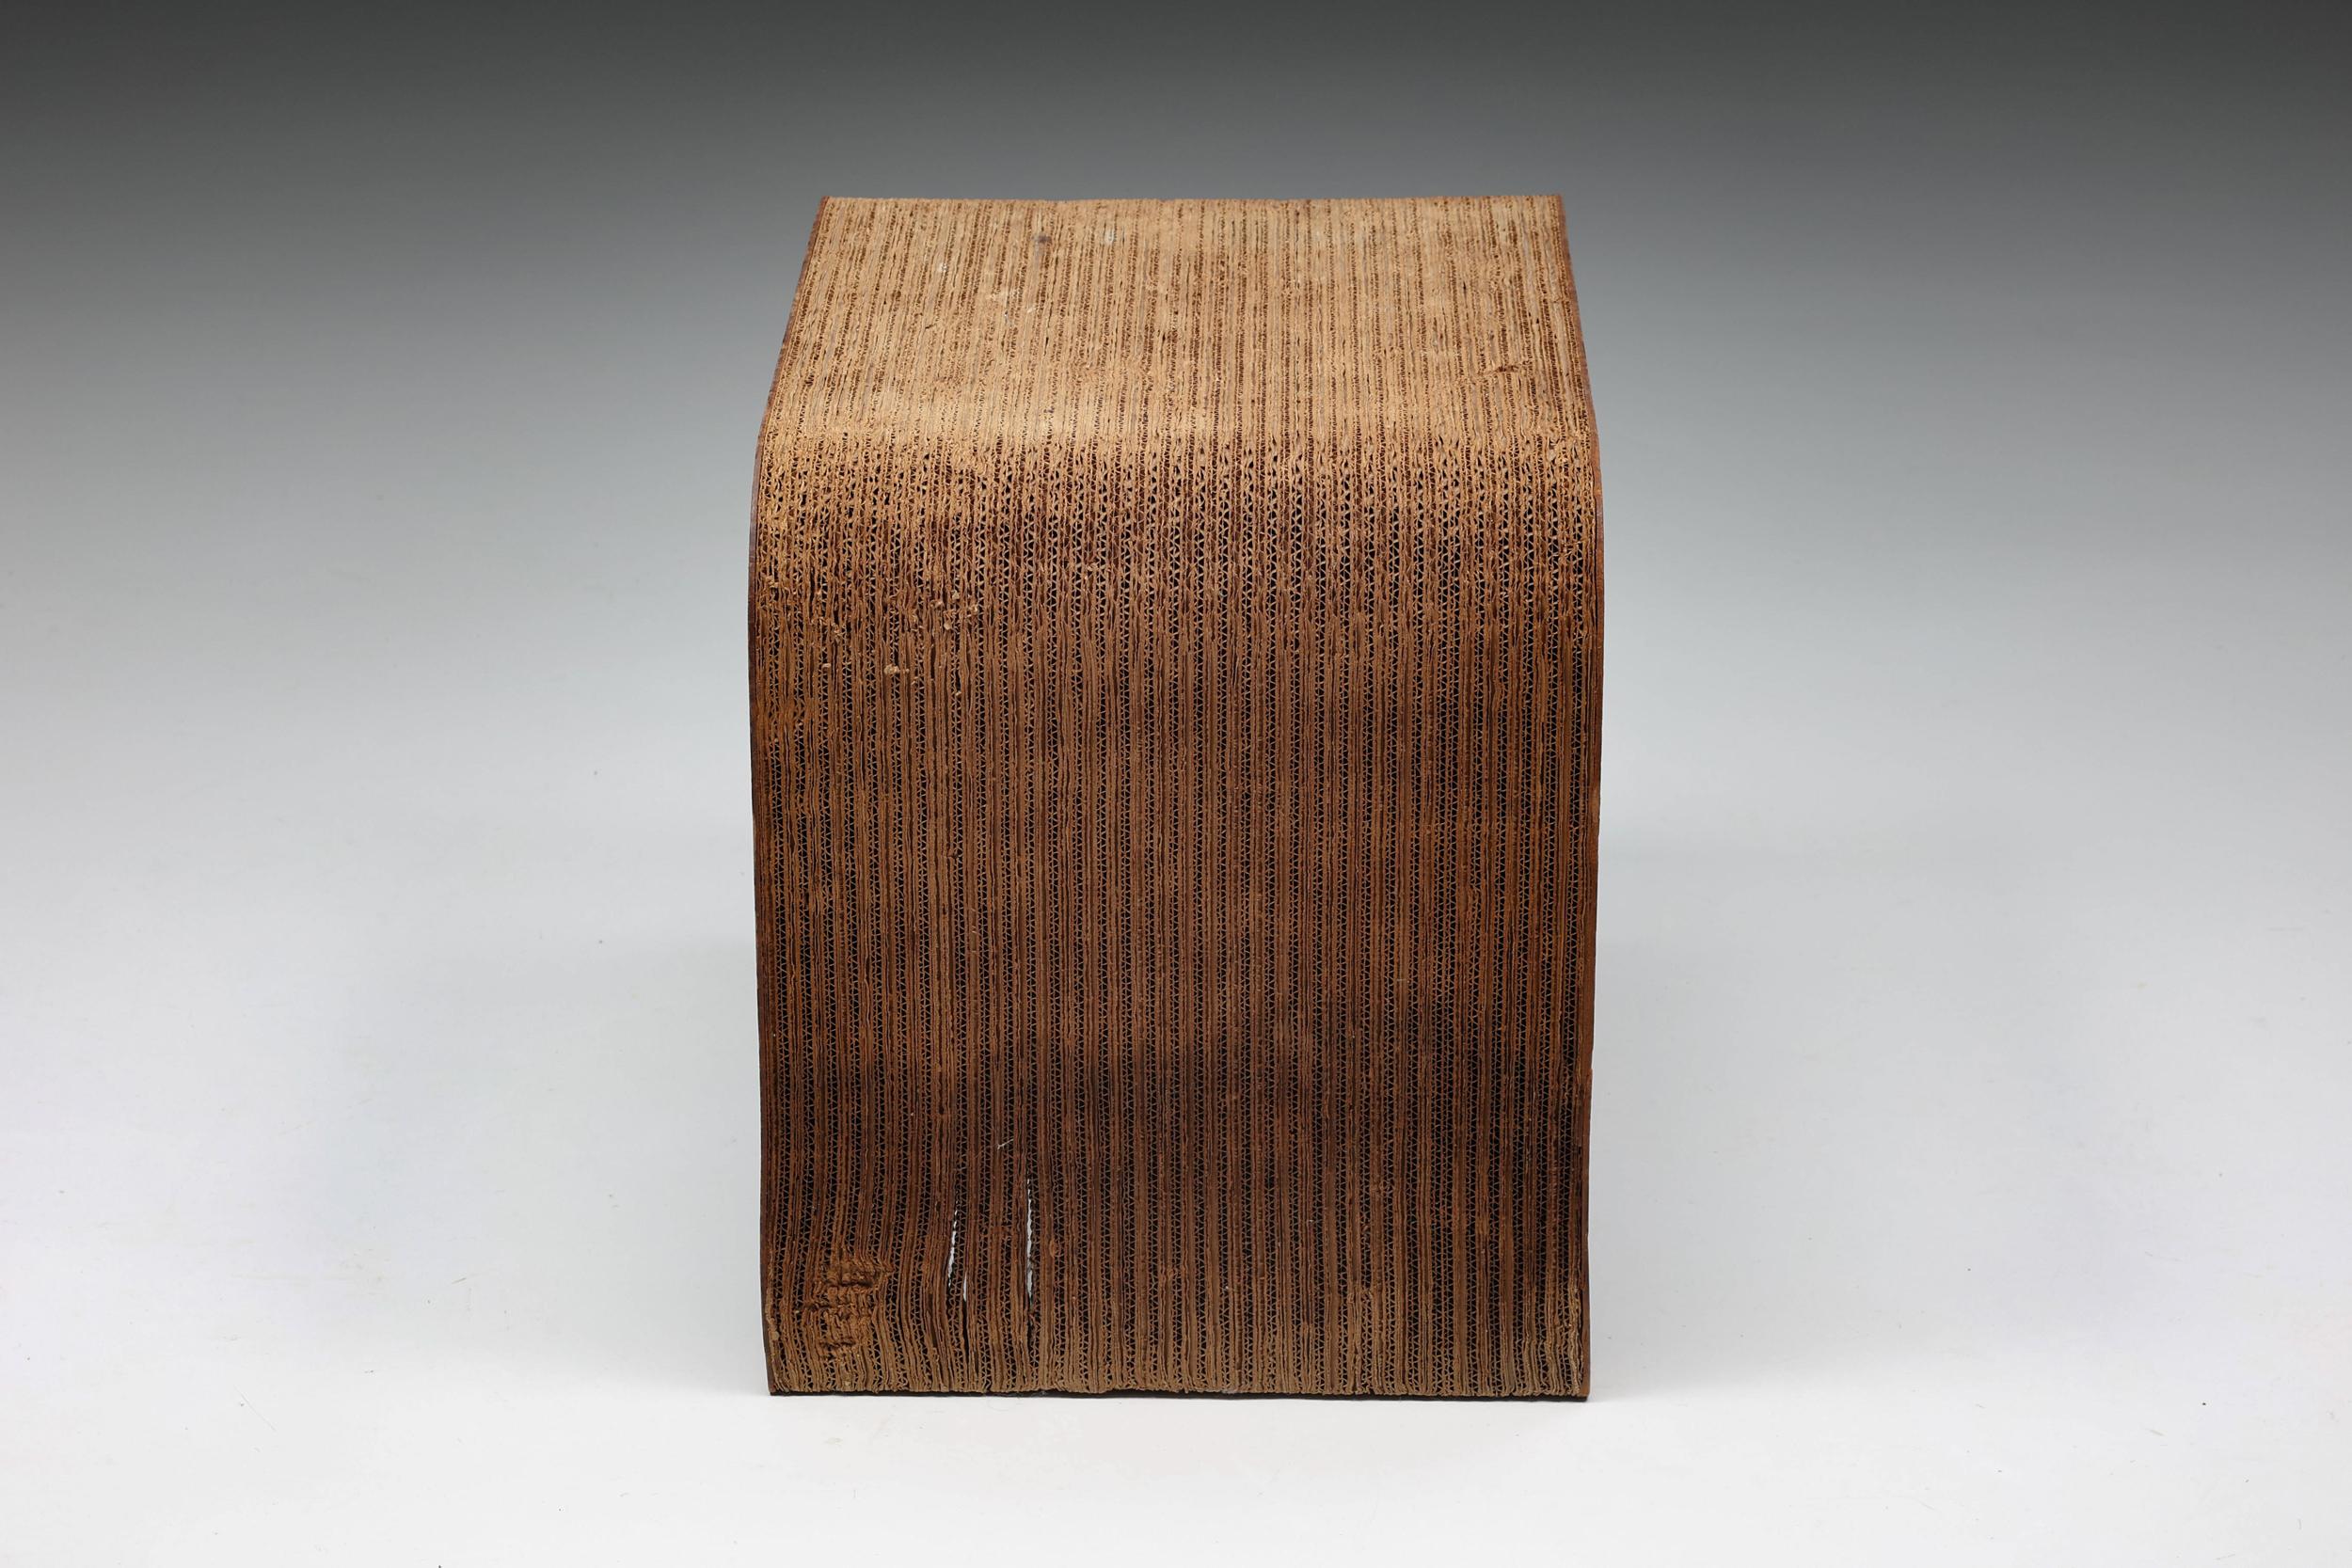 cardboard stools